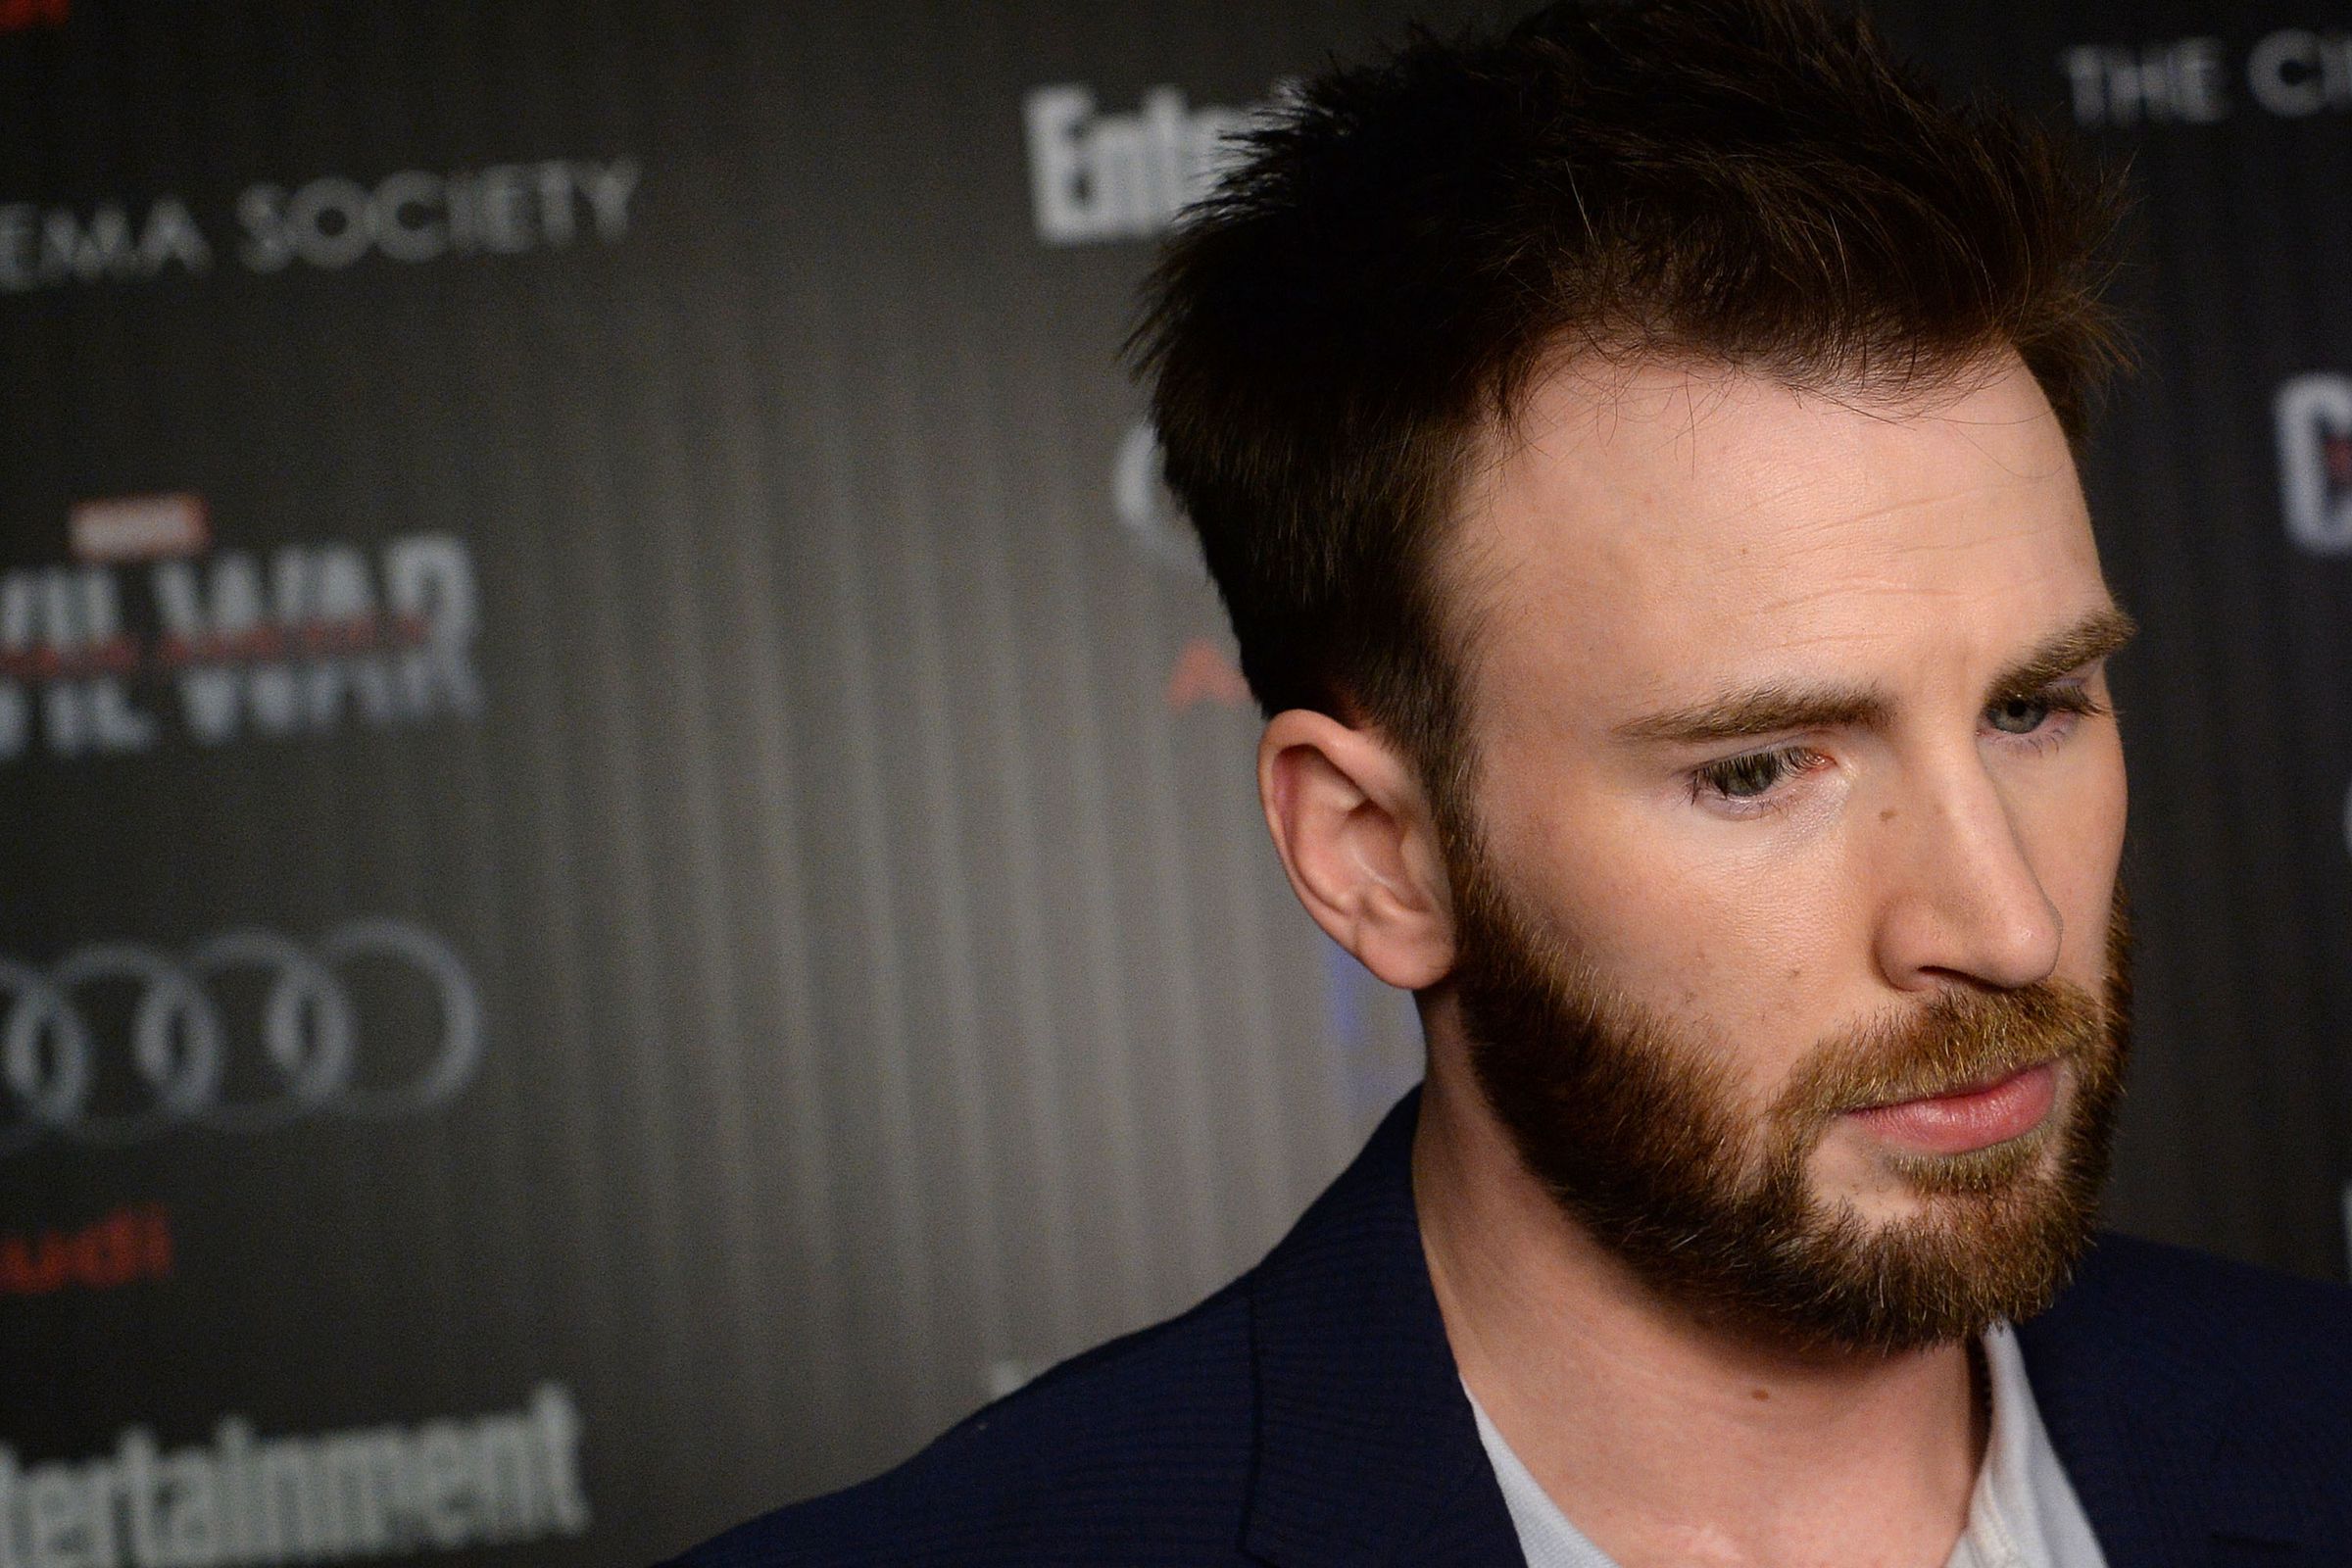 Actor Chris Evans attends a screening of Marvel’s ‘Captain America: Civil War’ in 2016